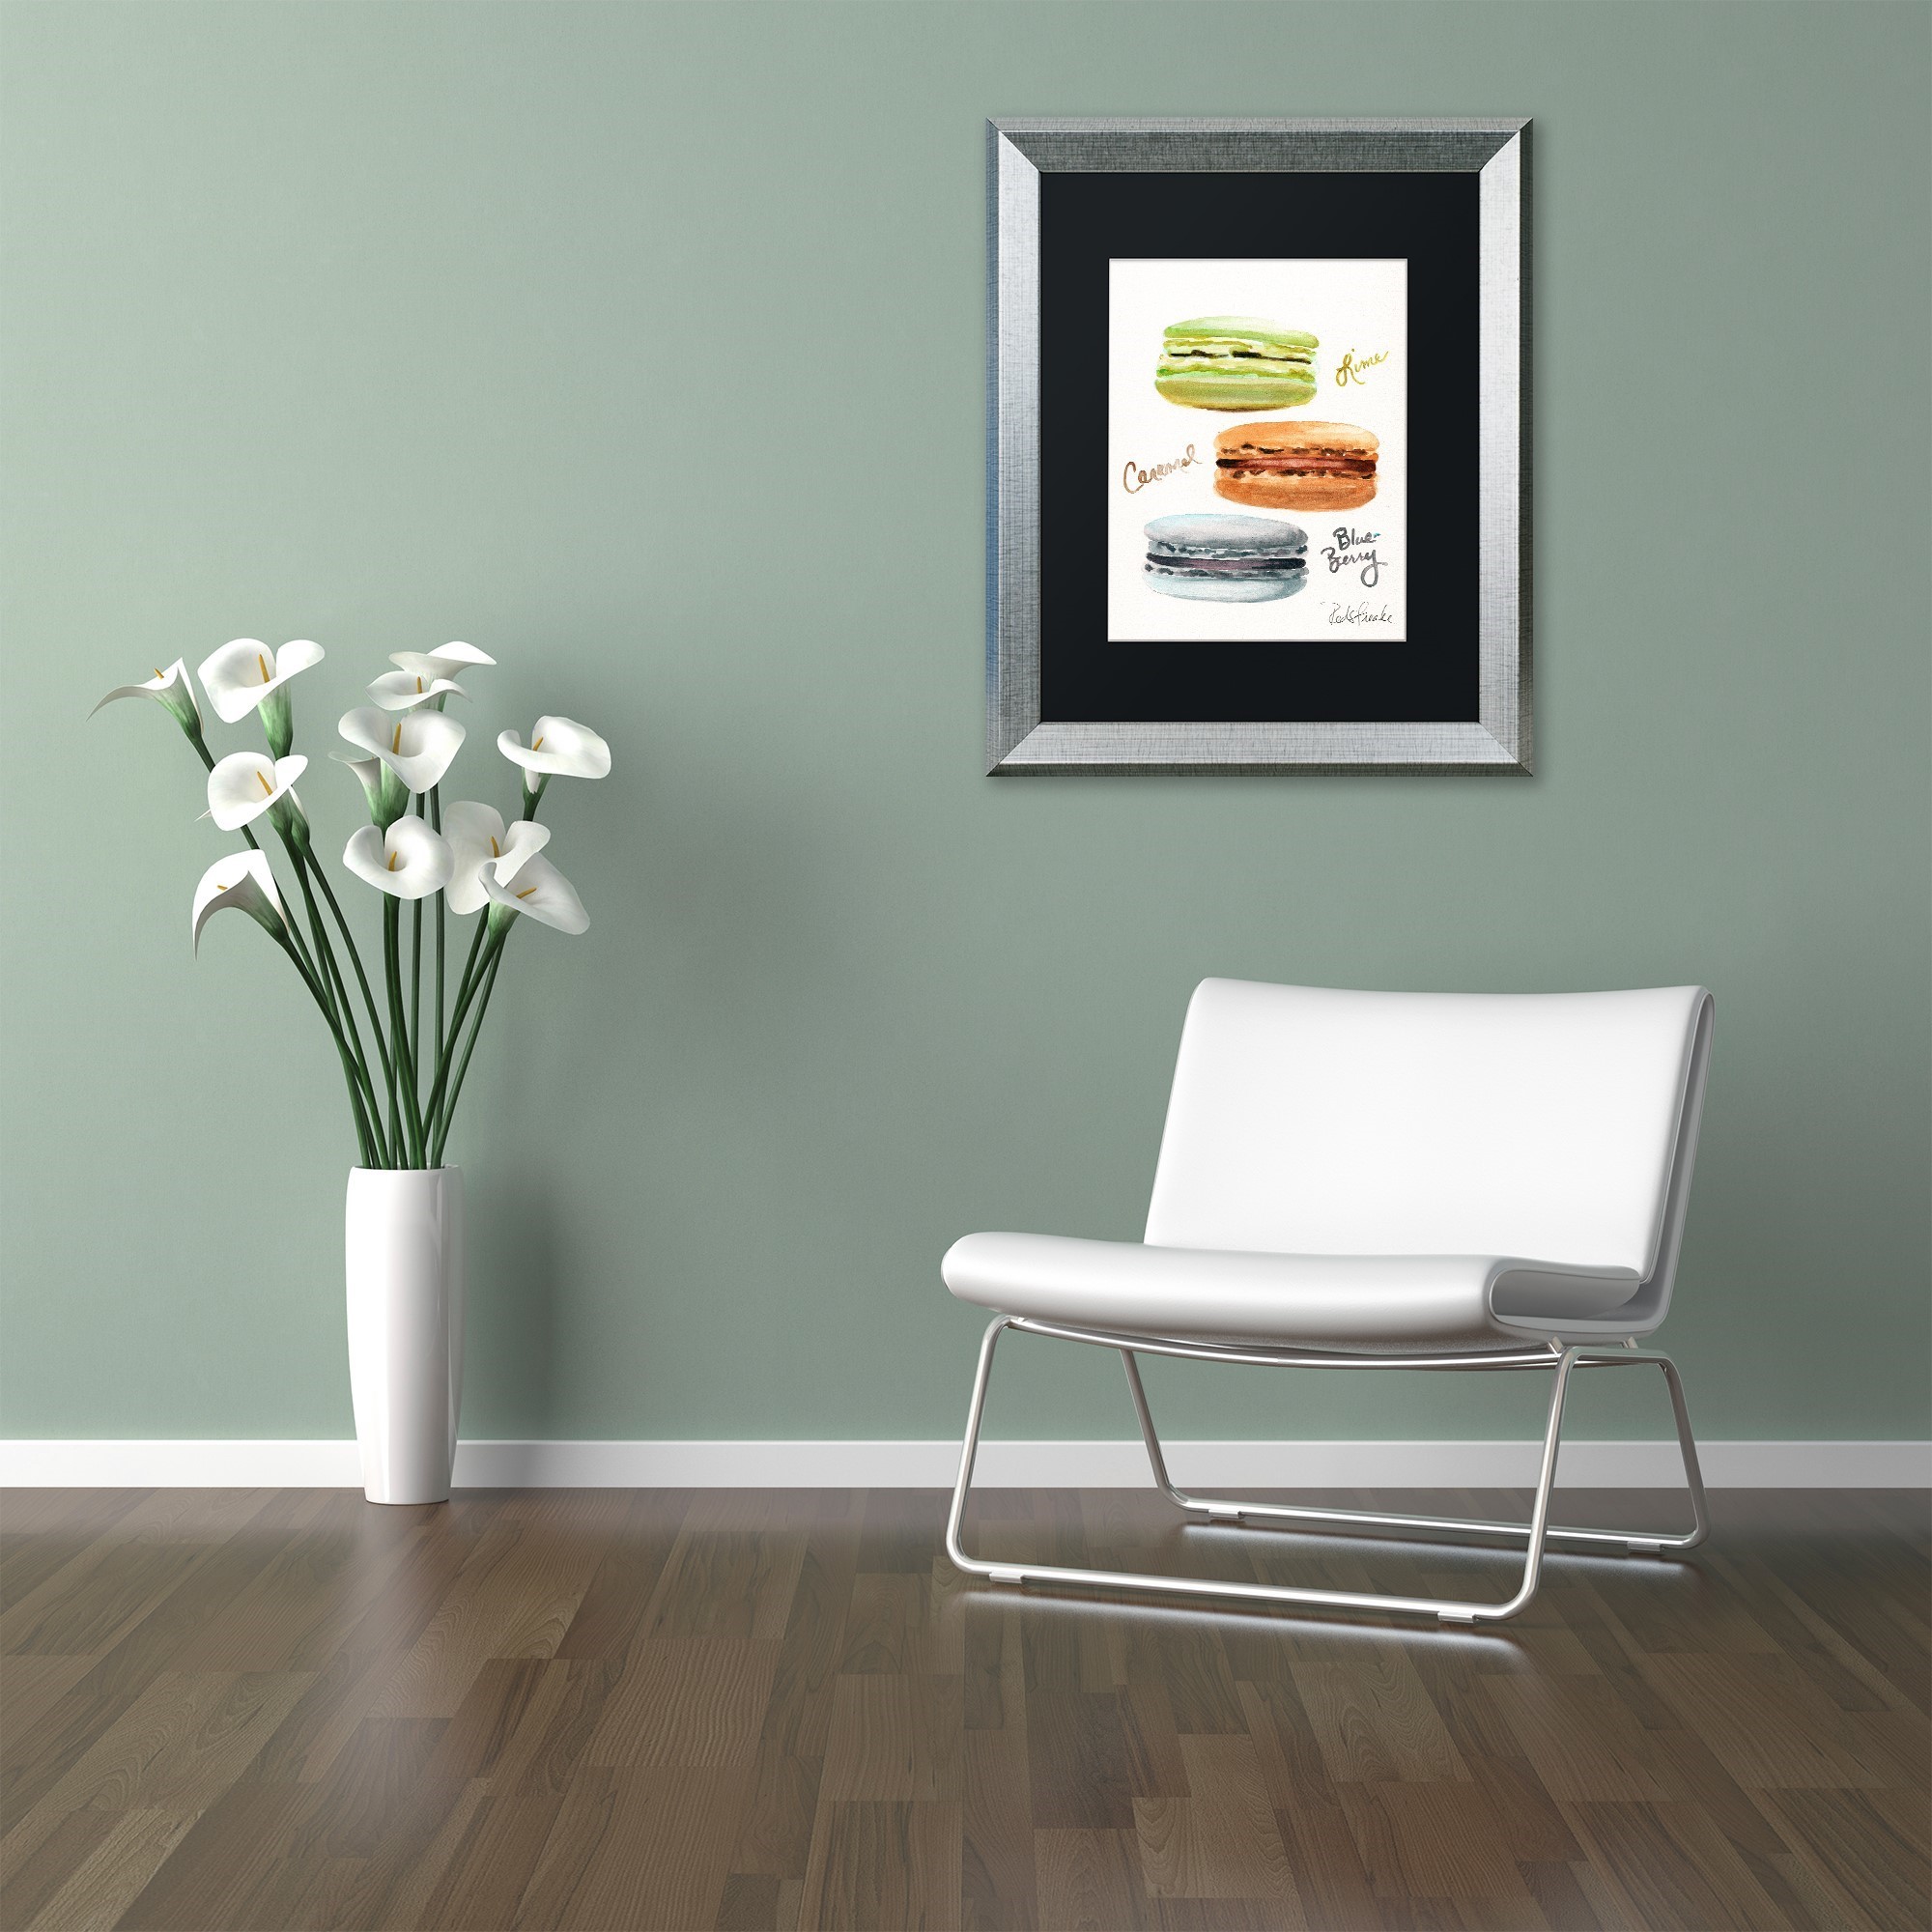 Trademark Fine Art "3 Macarons with Words" Canvas Art by Jennifer Redstreake Black Matte, Silver Frame - image 2 of 3